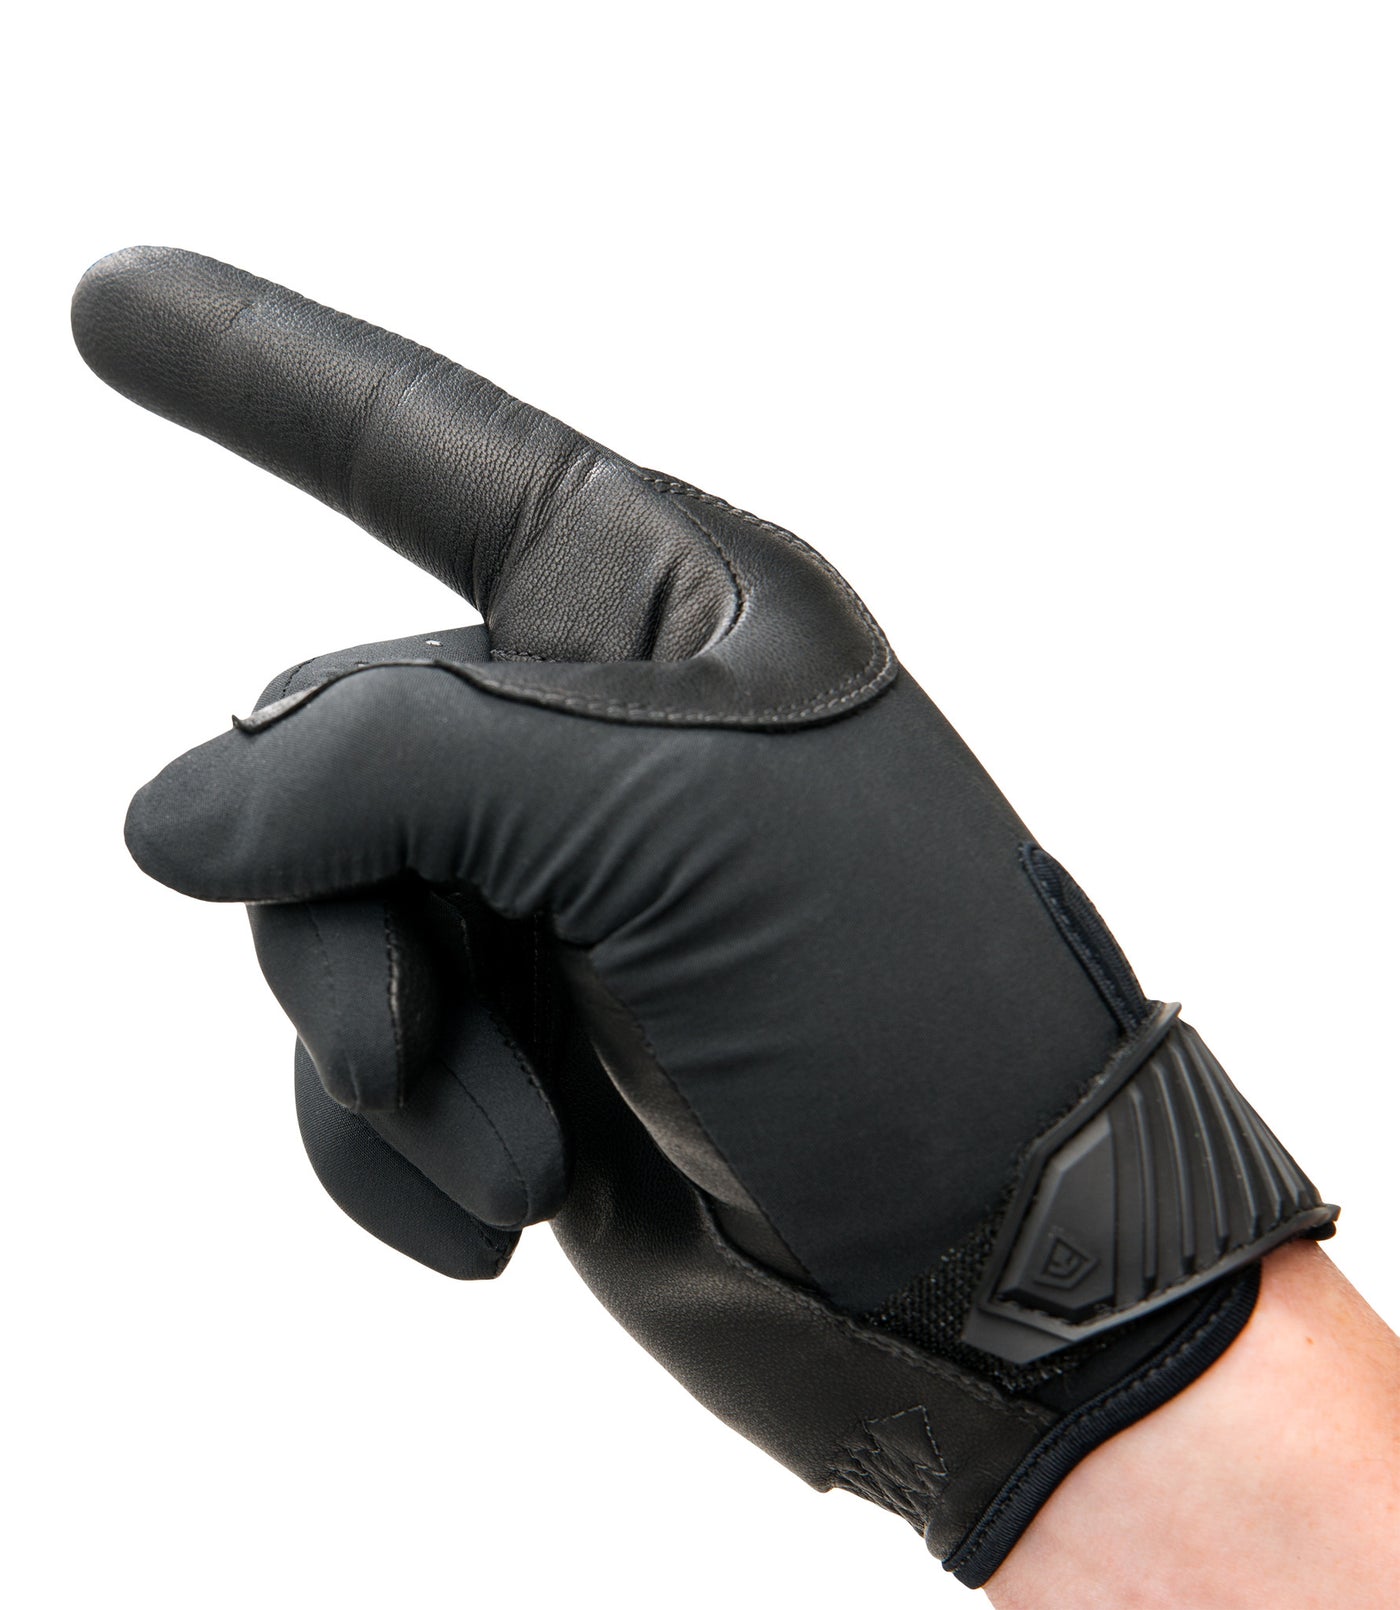 Seamless Finger of Men's Pro Knuckle Glove in Black